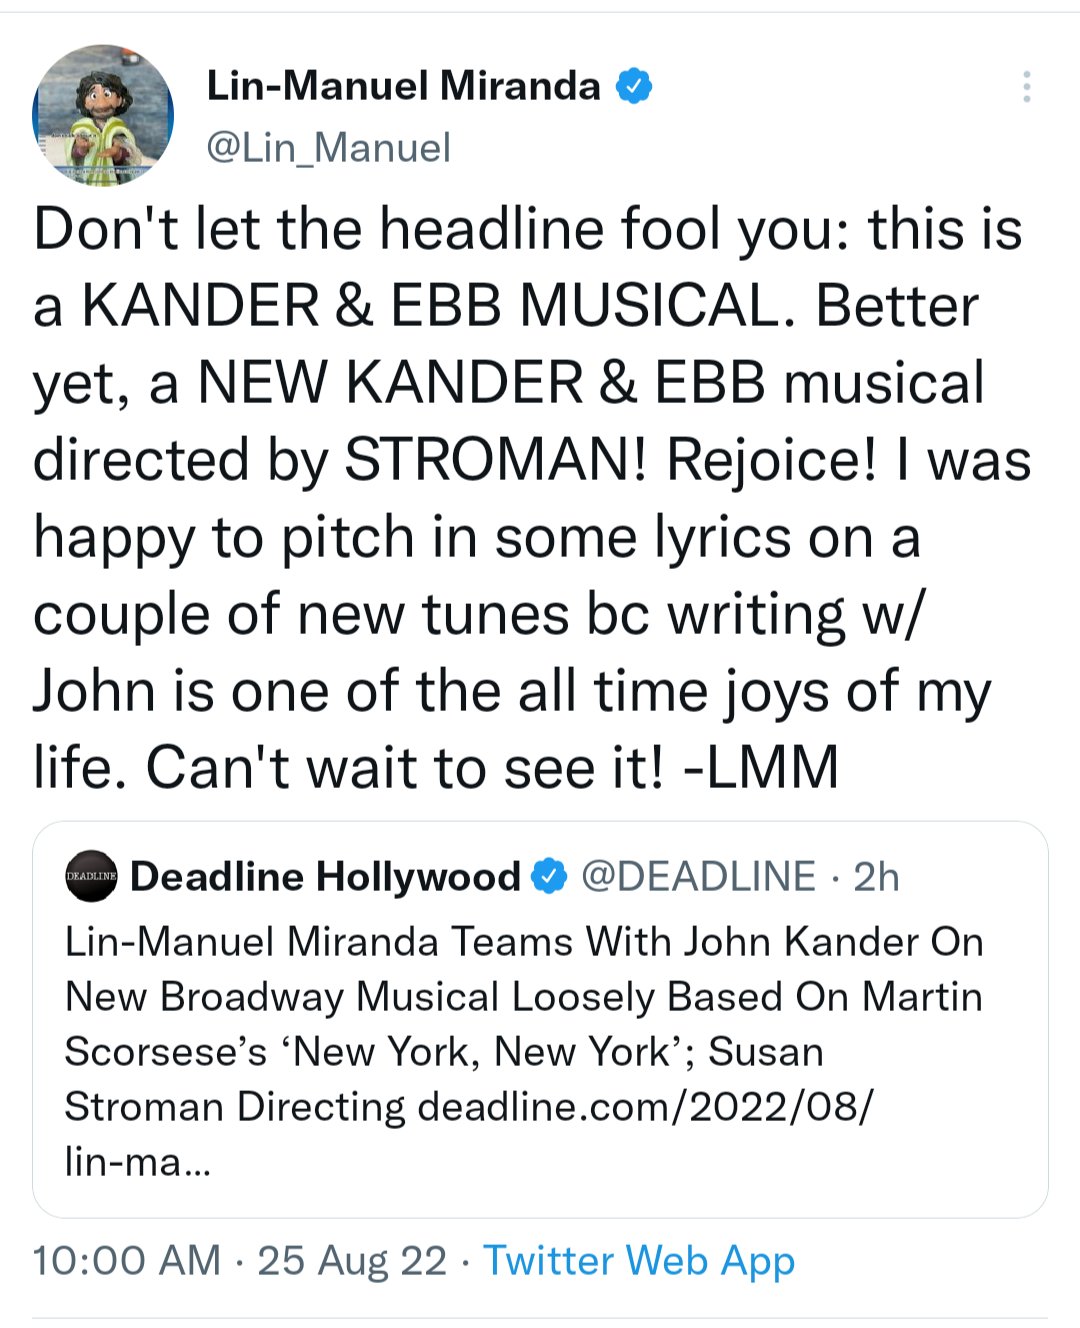 LMM clarifies his involvement-says it's "some lyrics" on "a couple new tunes"